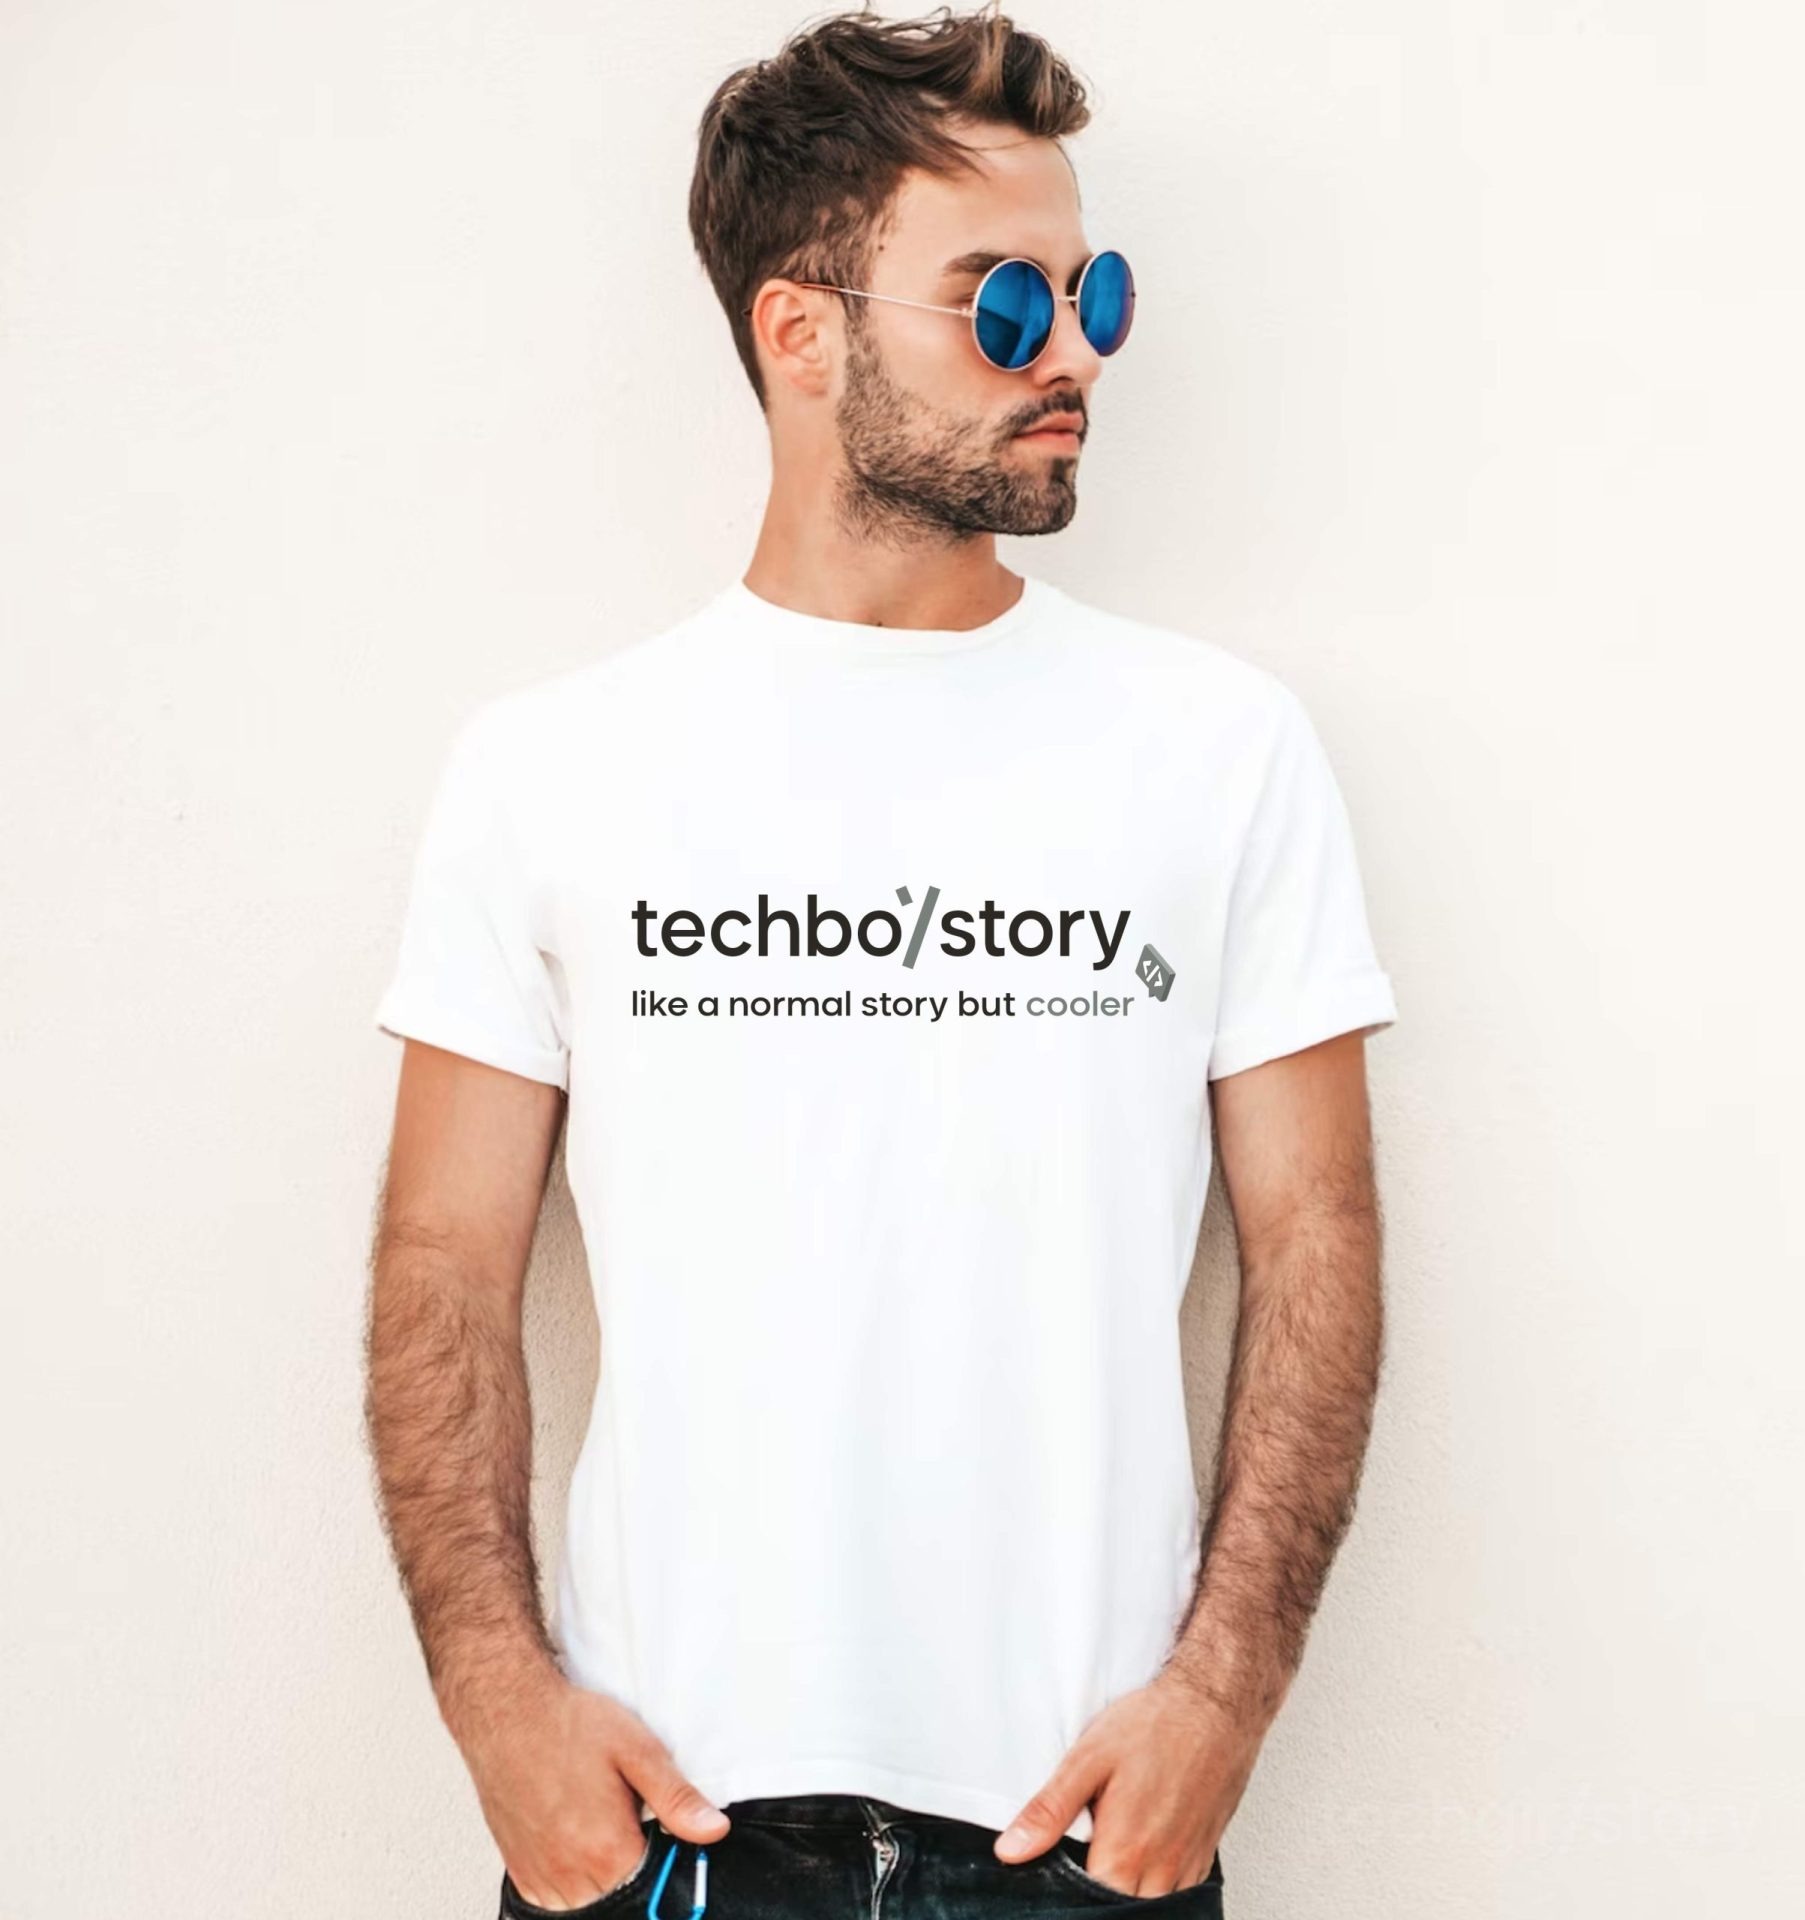 tricou tech boy story cooler programatori software developer freelancer coding